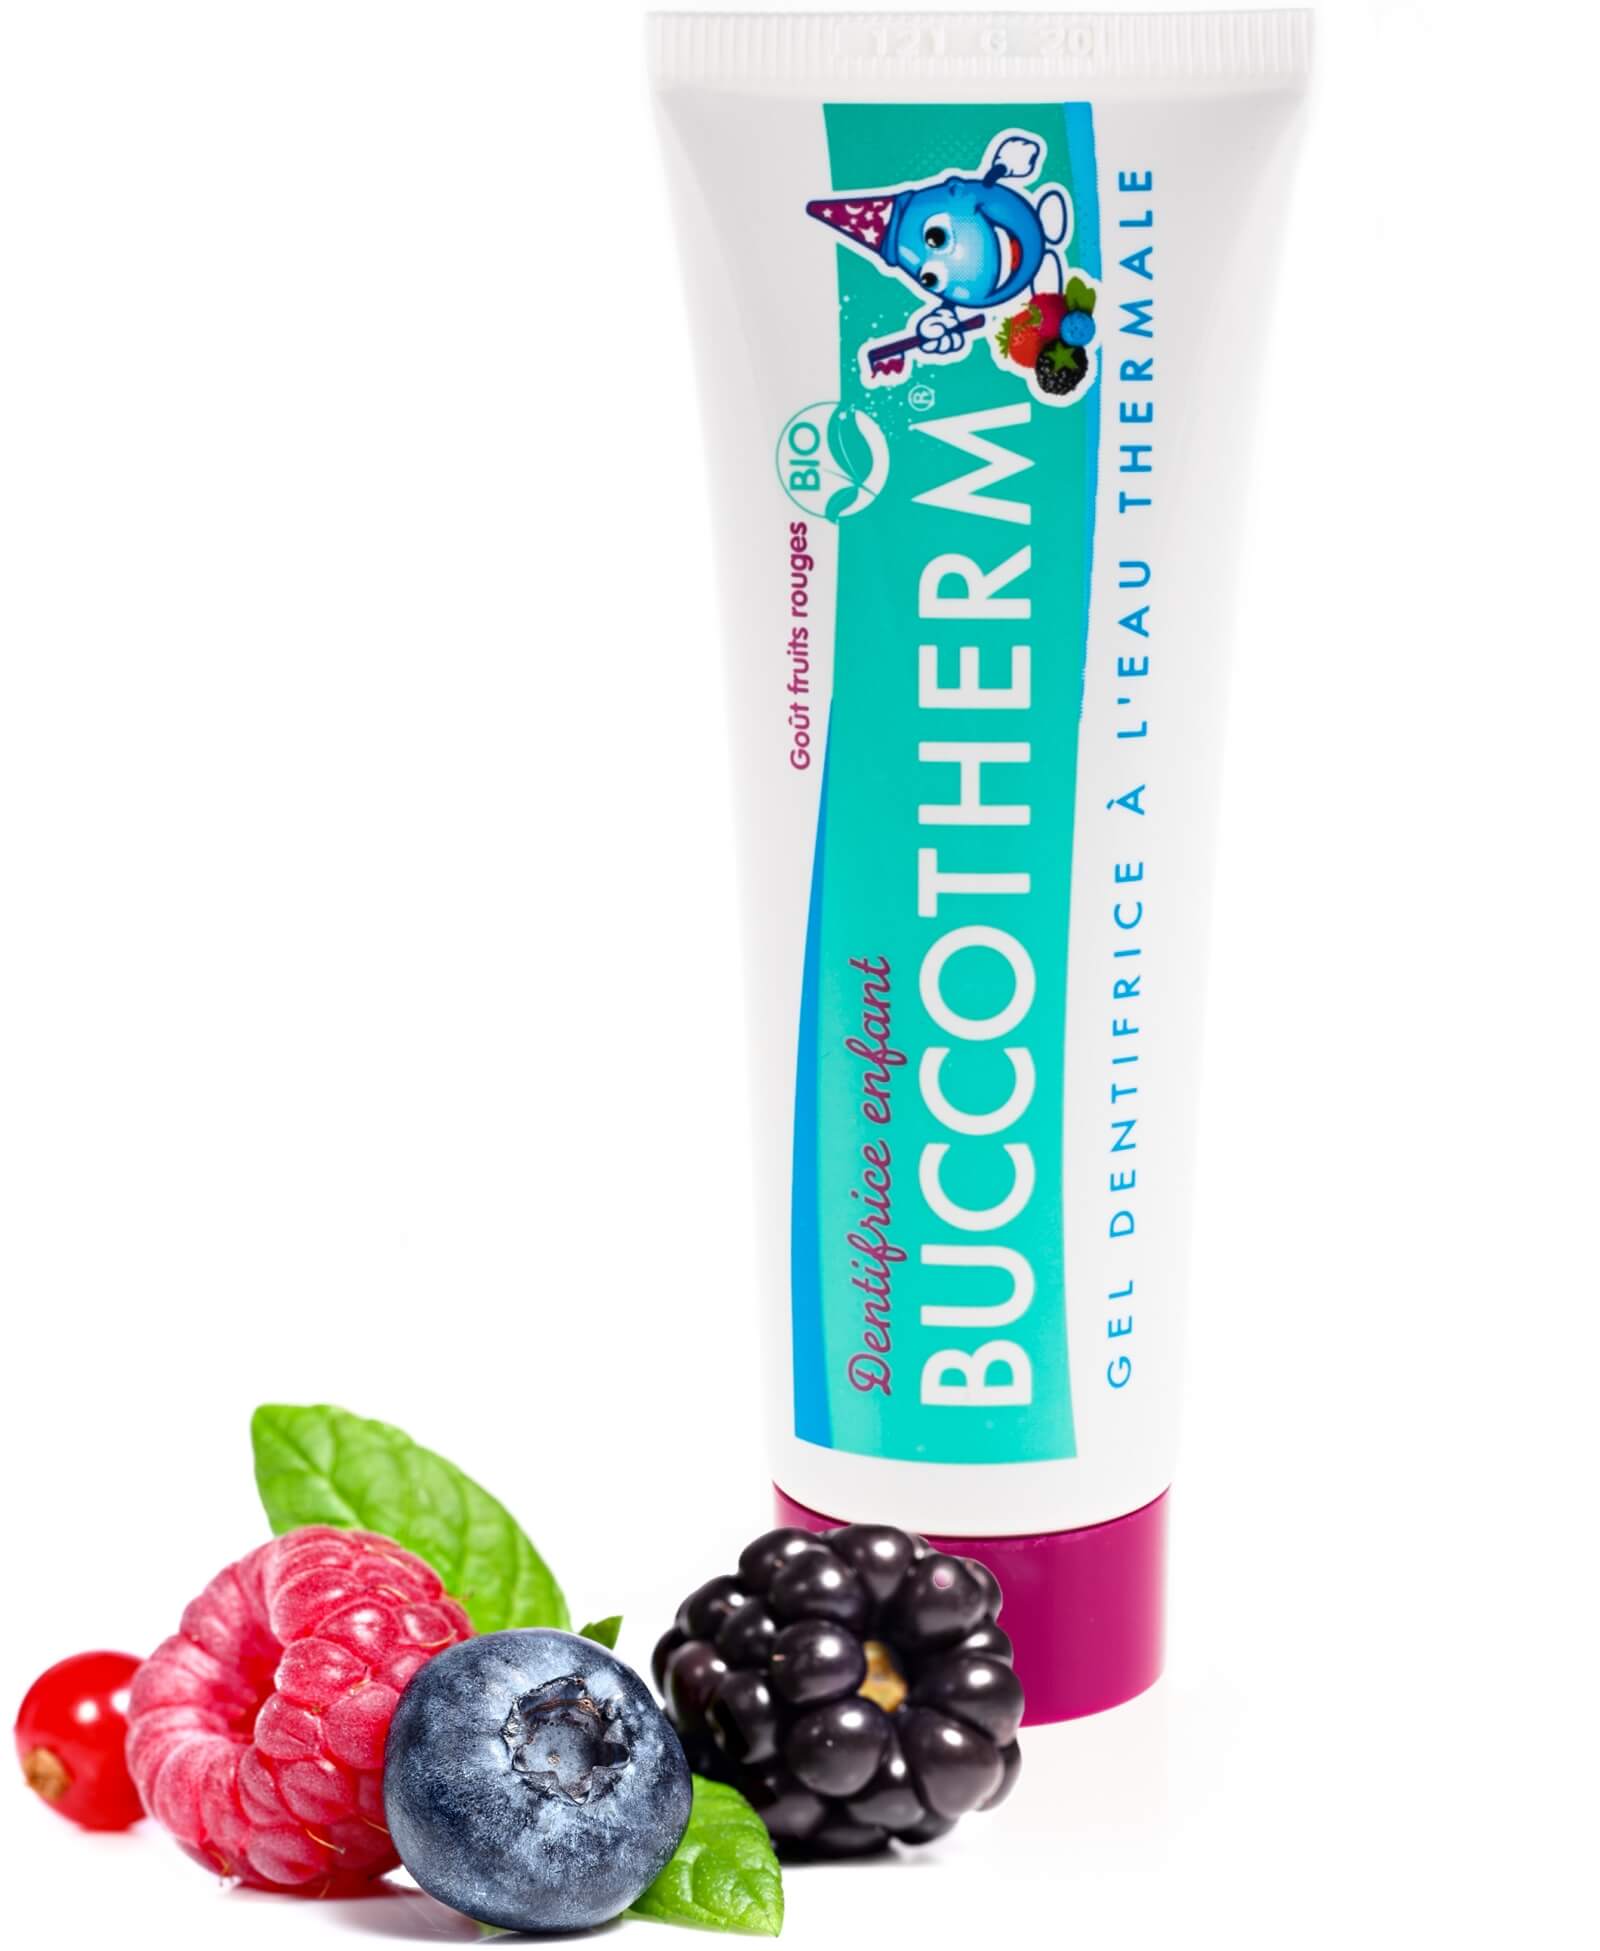 Spray Buccal certifié BIO - BuccoTherm